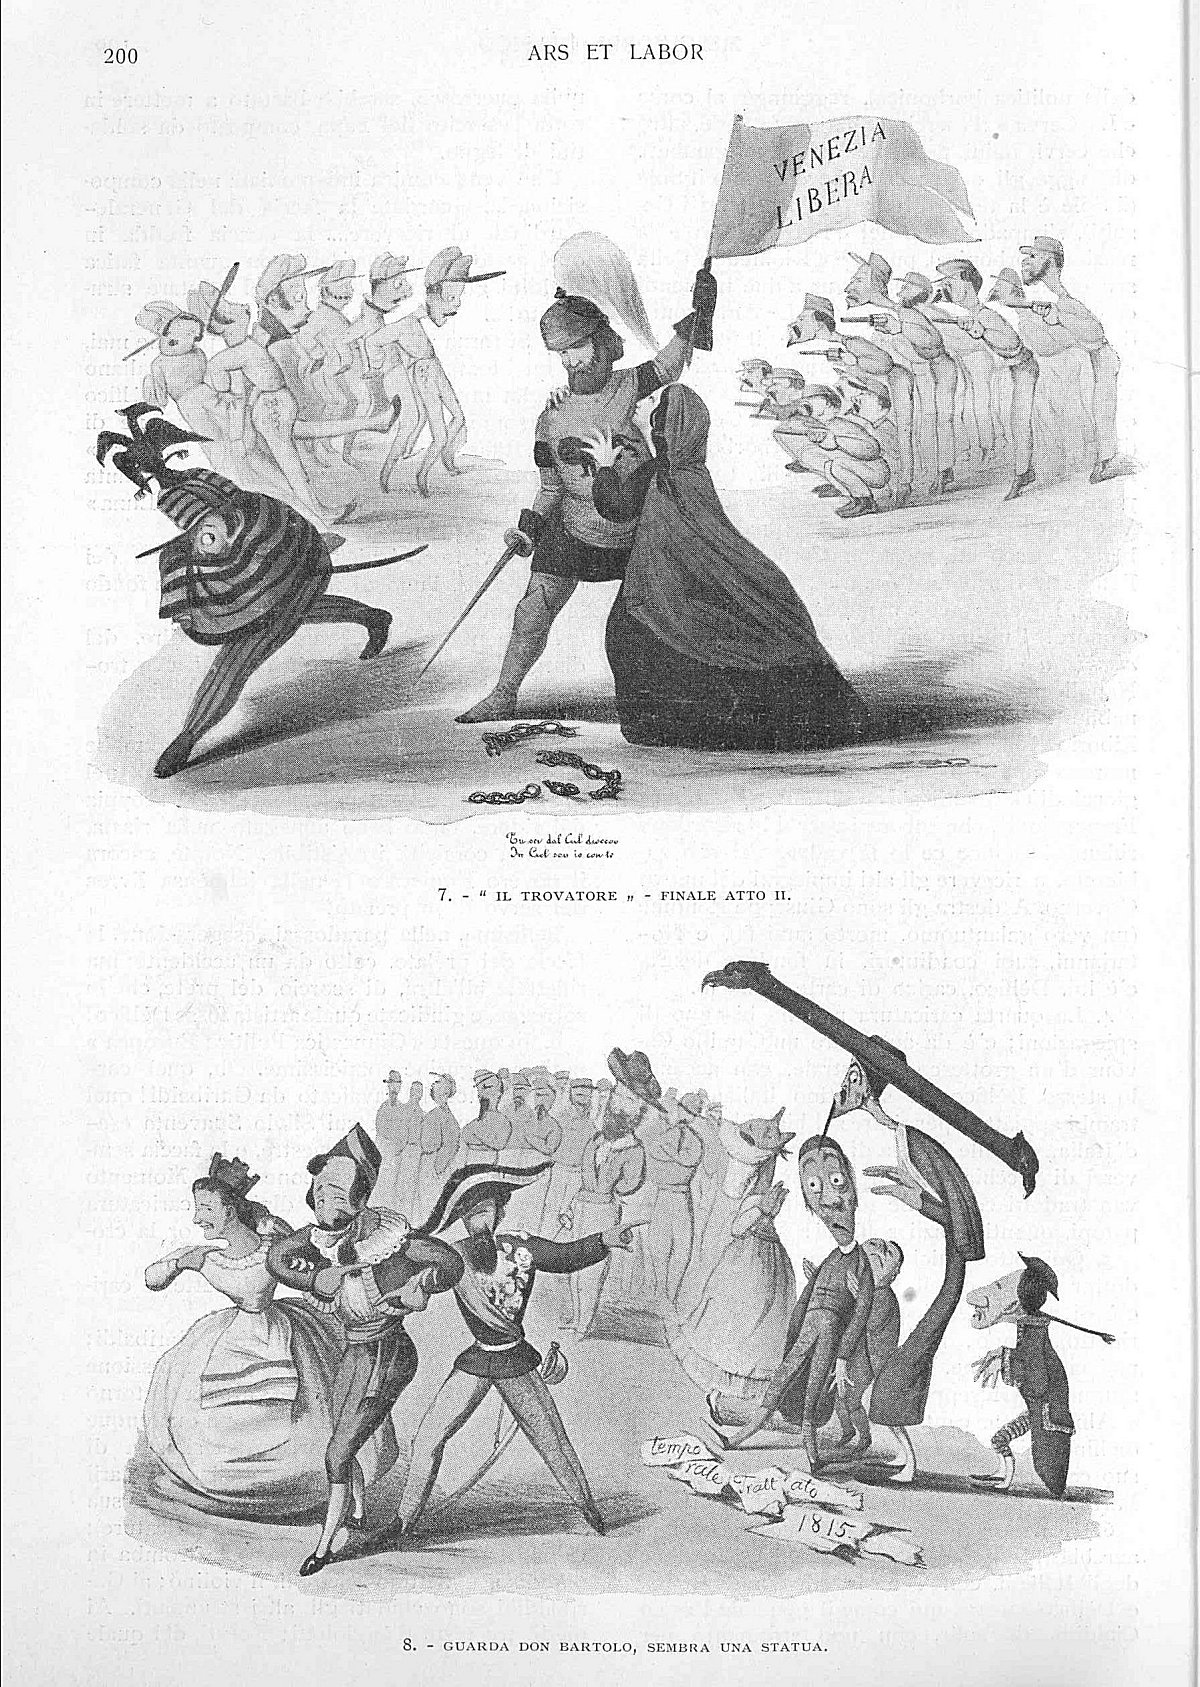 "Ars et Labor", Marzo 1906, anno 61°, n. 3, pag. 200